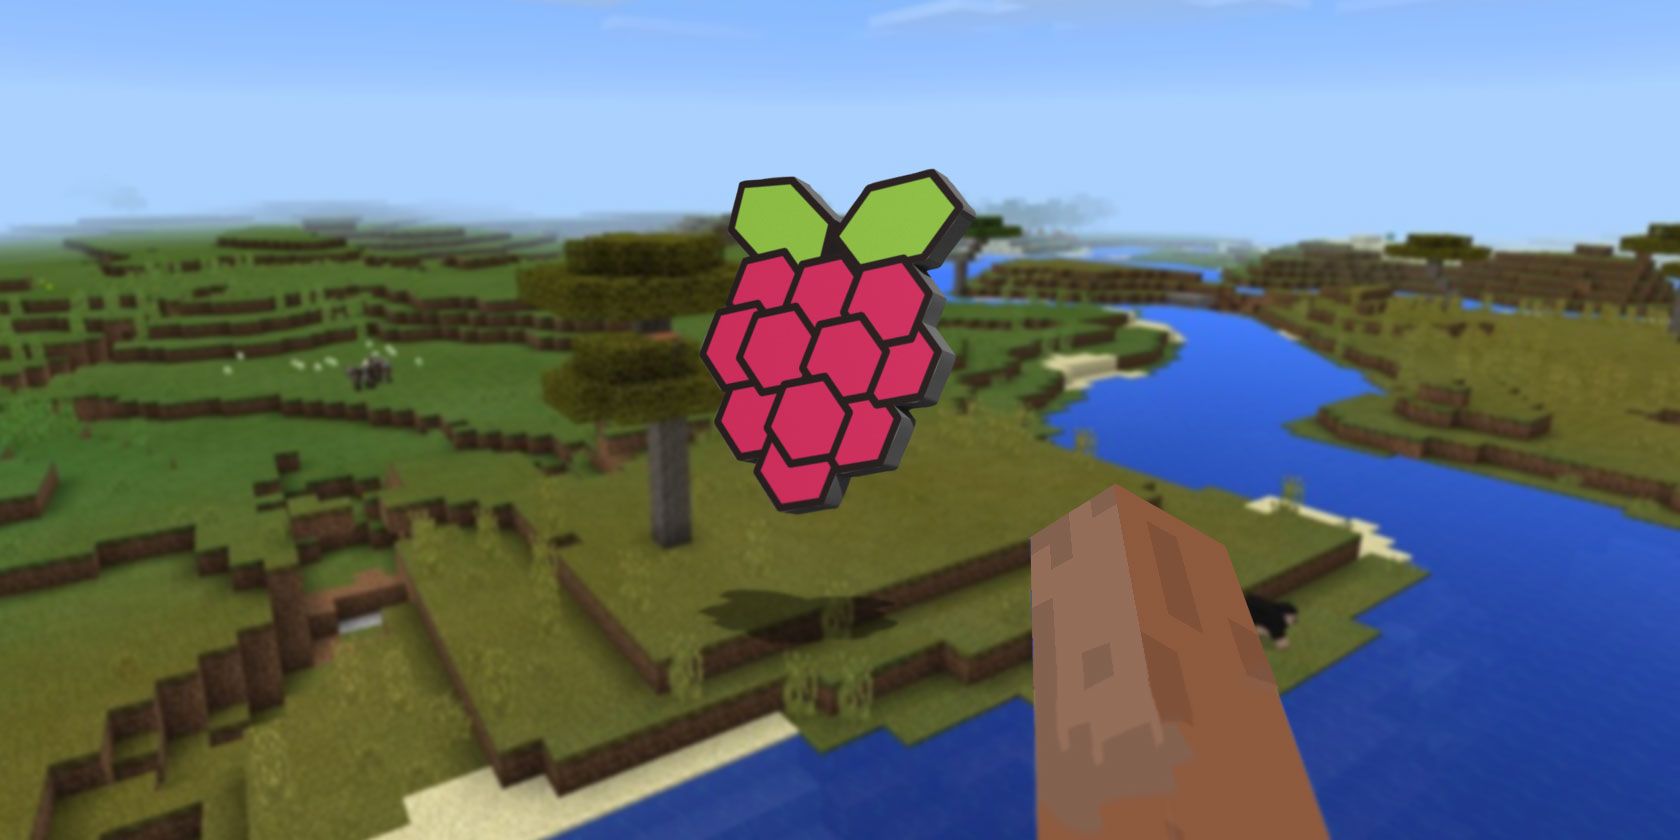 How to Make a Minecraft Server on Raspberry Pi